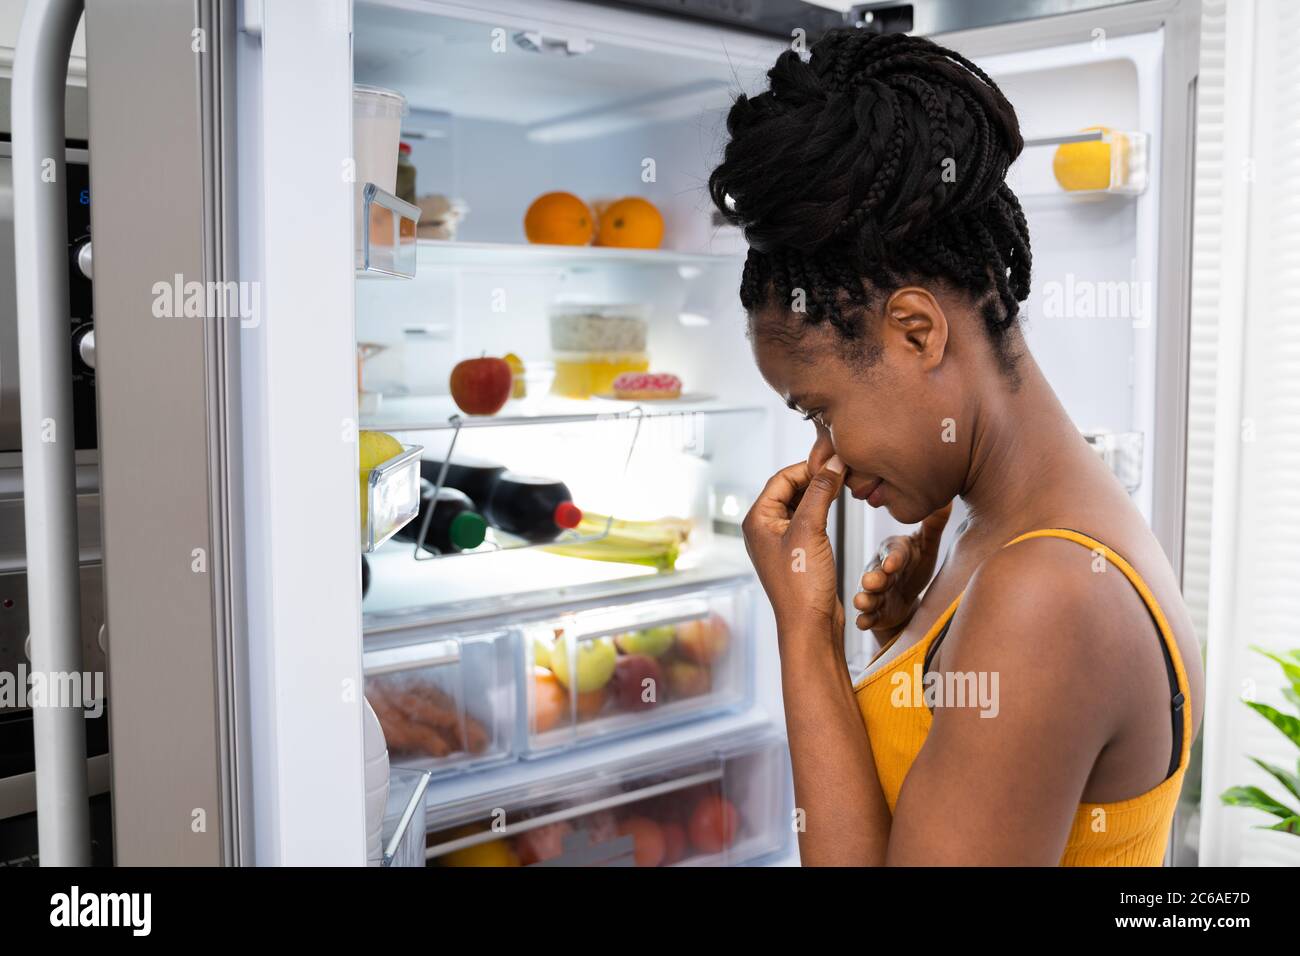 https://c8.alamy.com/comp/2C6AE7D/rotten-fruit-bad-smell-in-open-fridge-or-refrigerator-2C6AE7D.jpg